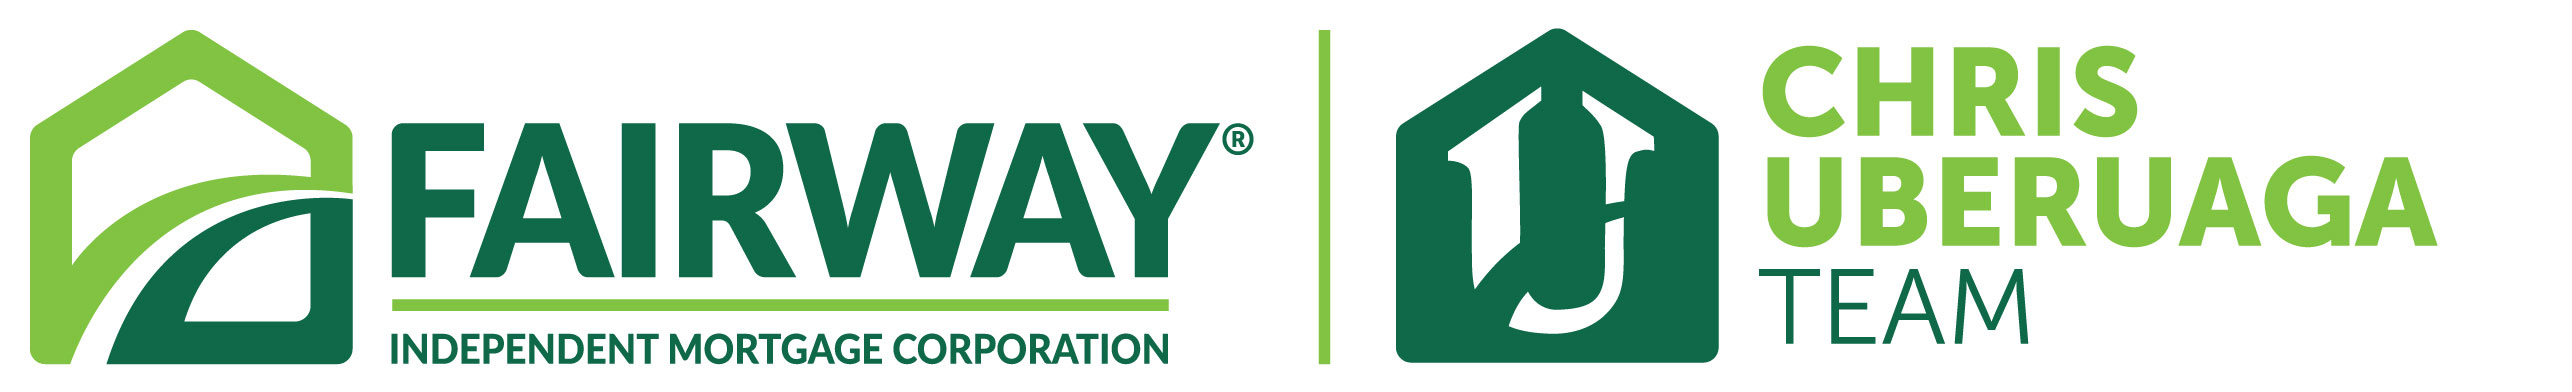 Chris Uberuaga | Fairway Independent Mortgage Corporation | Logo